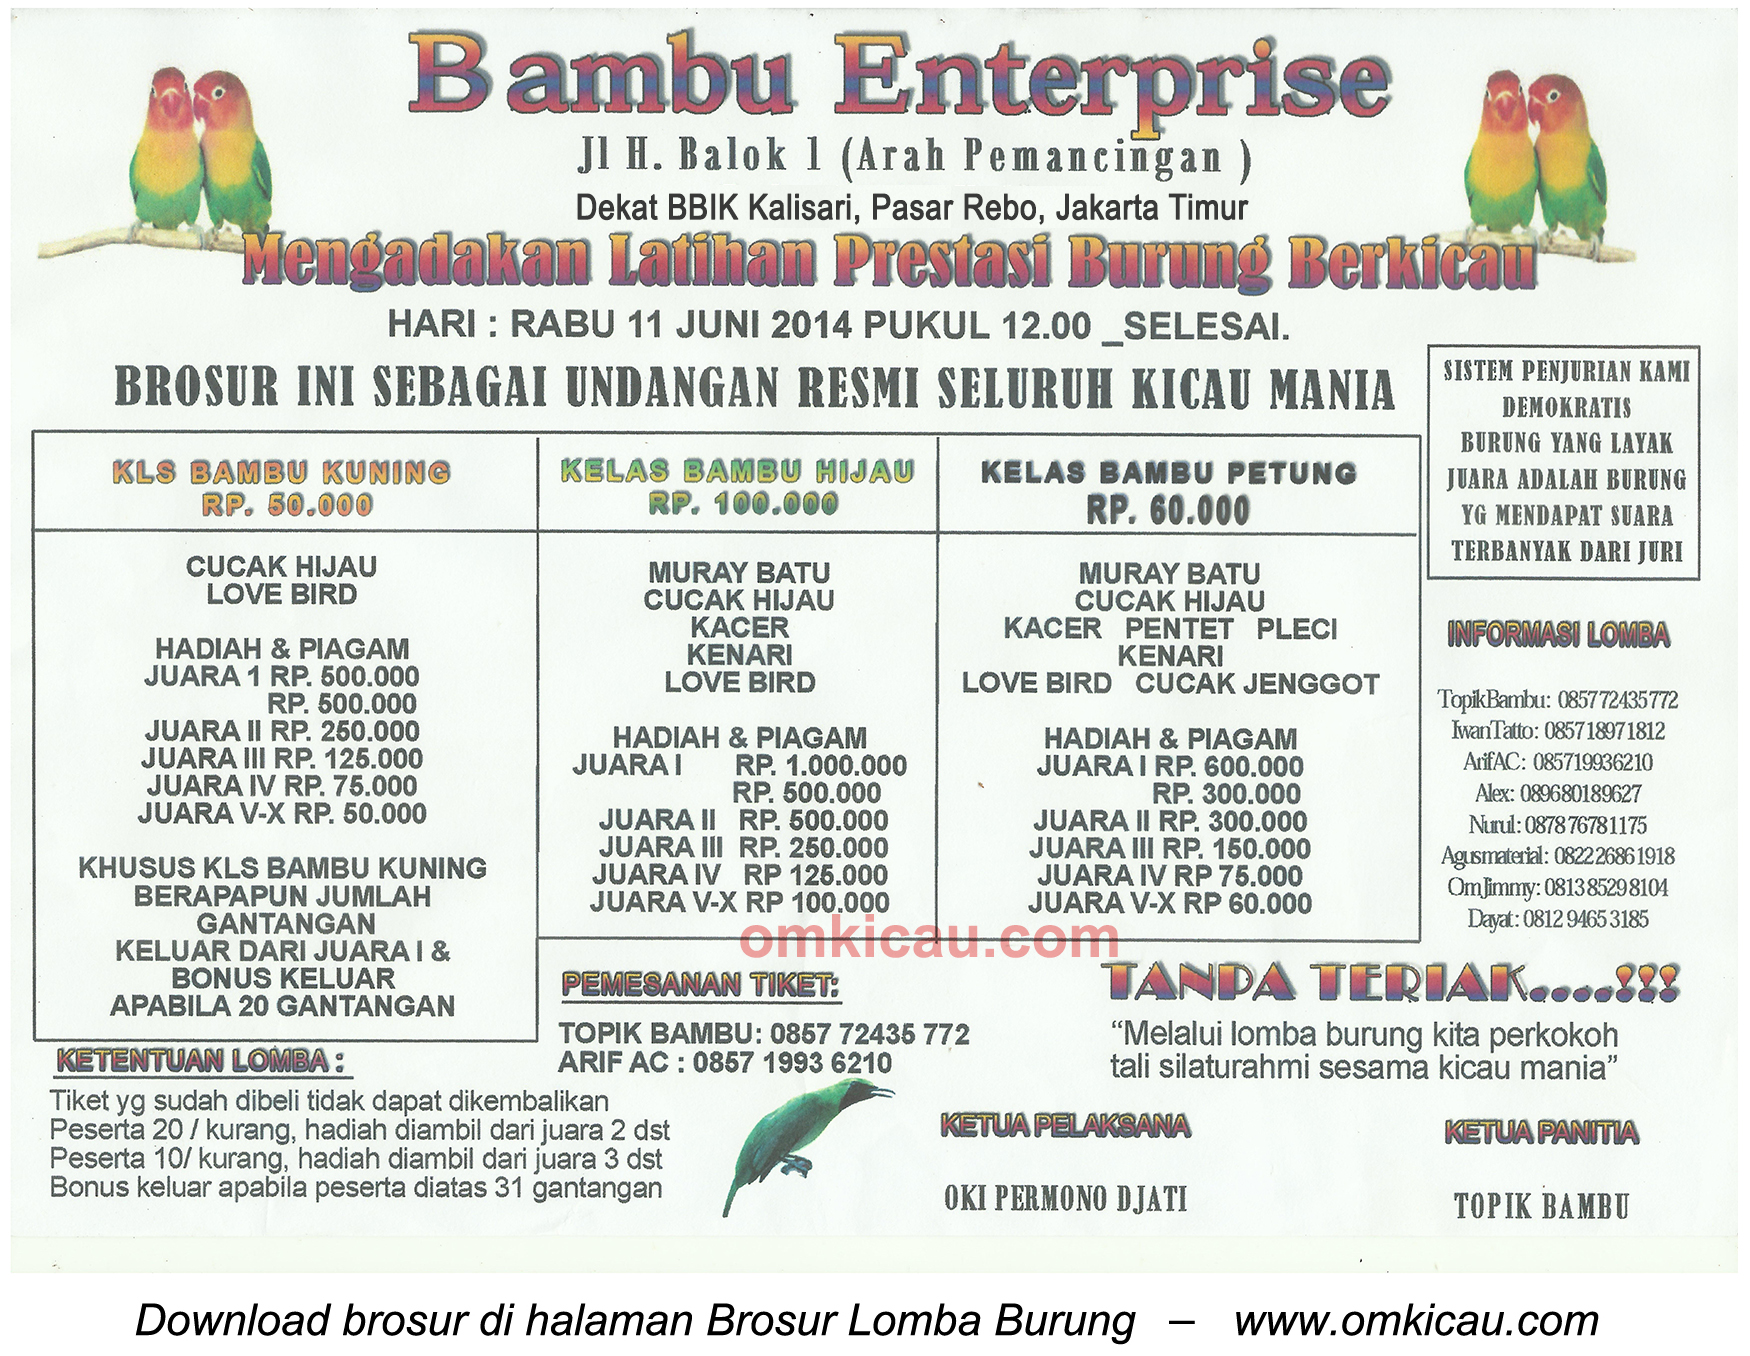 Brosur Latpres Burung Berkicau Bambu Enterprise, Jakarta Timur, 11 Juni 2014